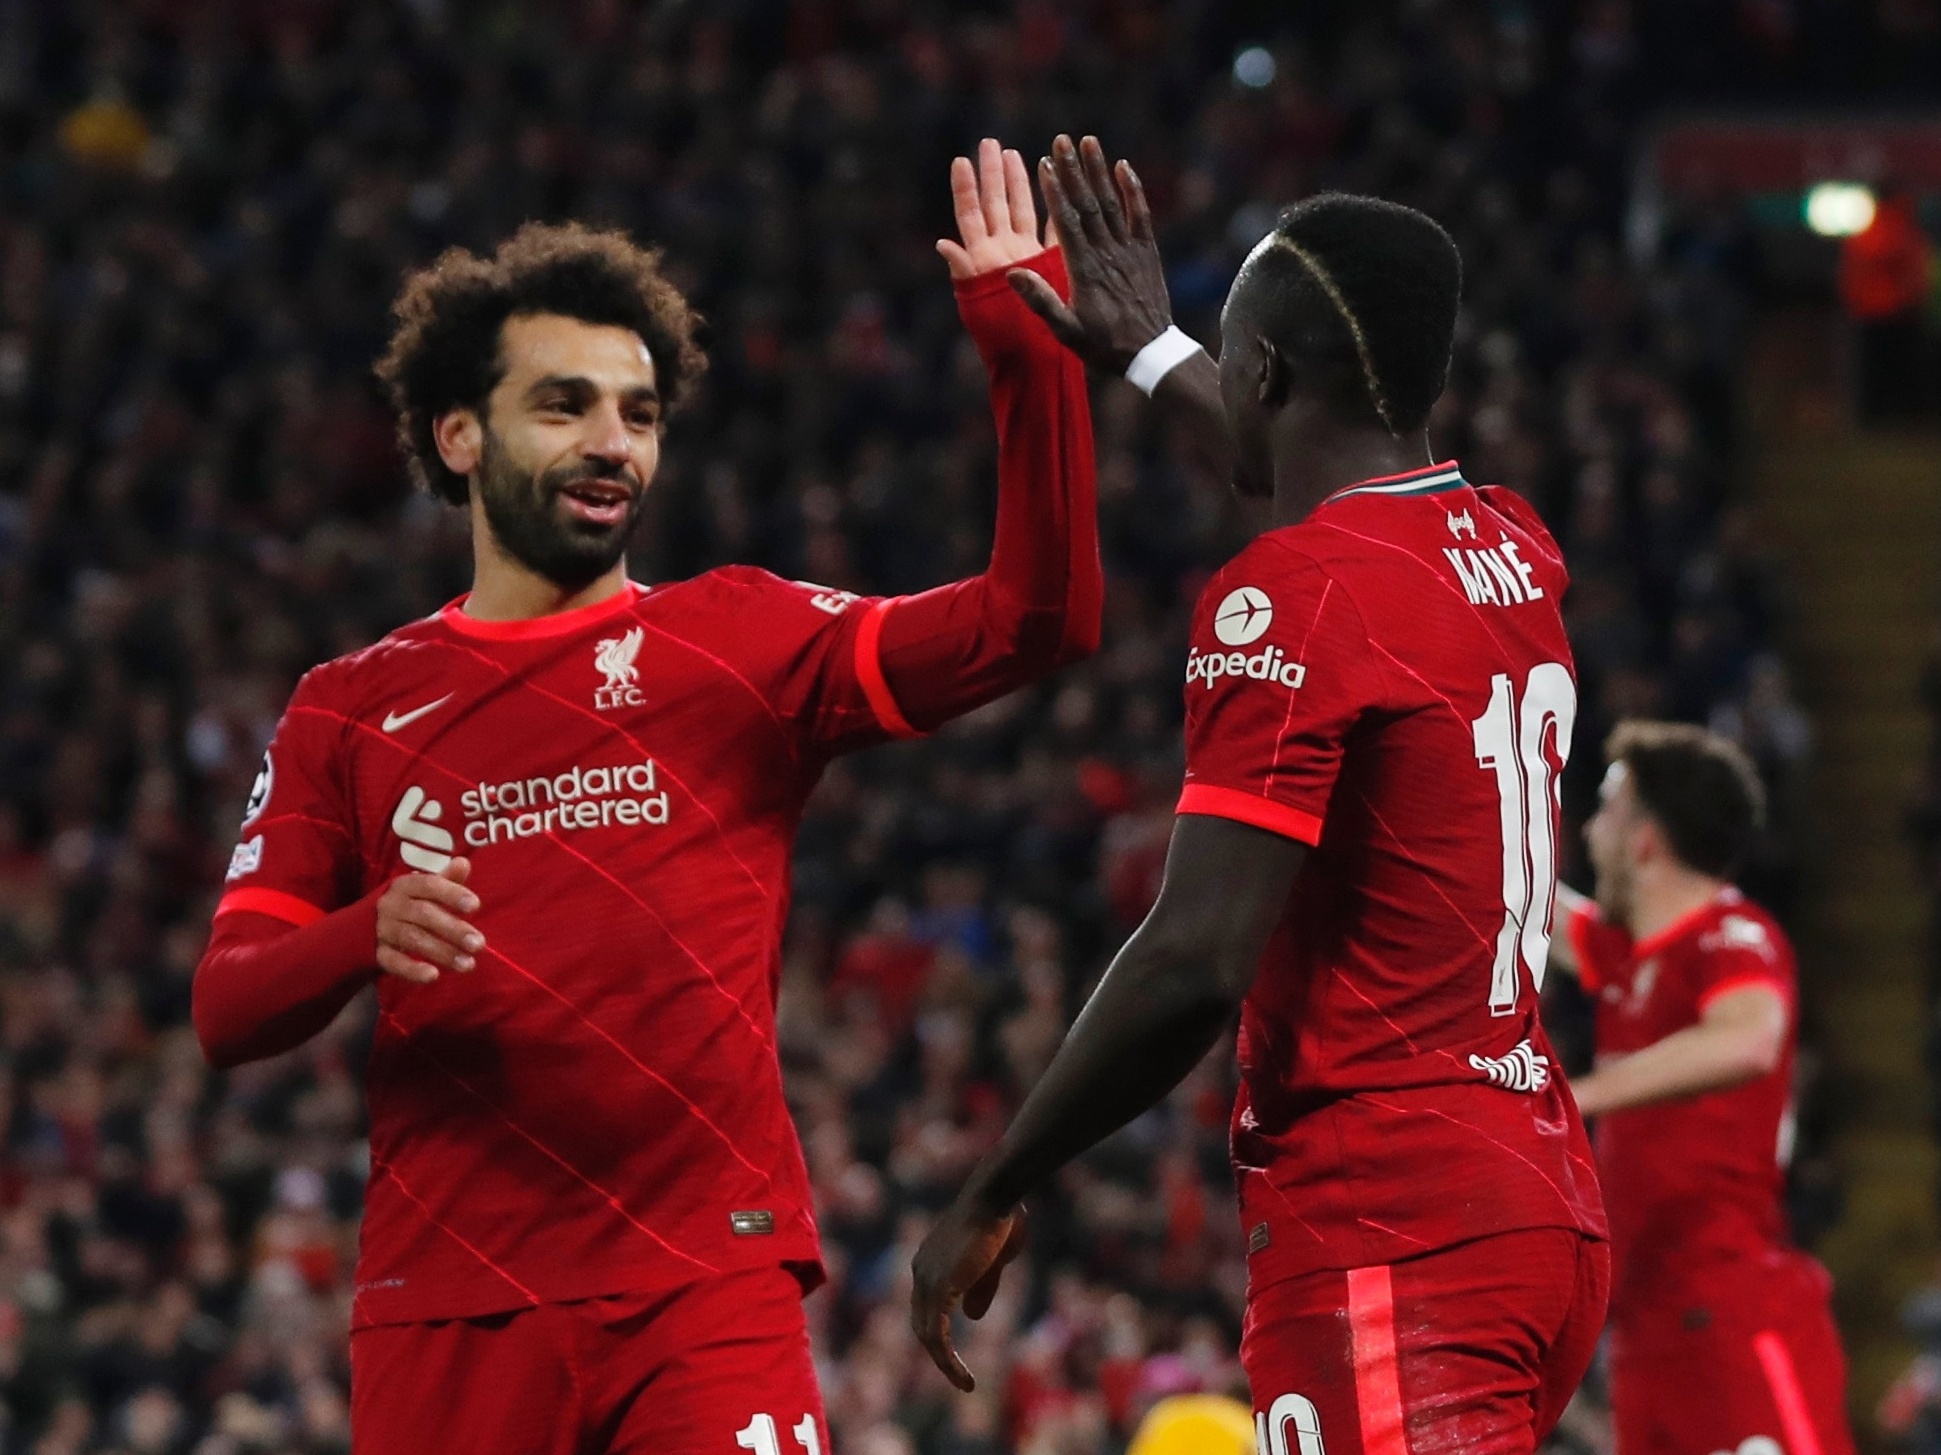 Atitute de Mané para Salah surpreende torcedores do Liverpool